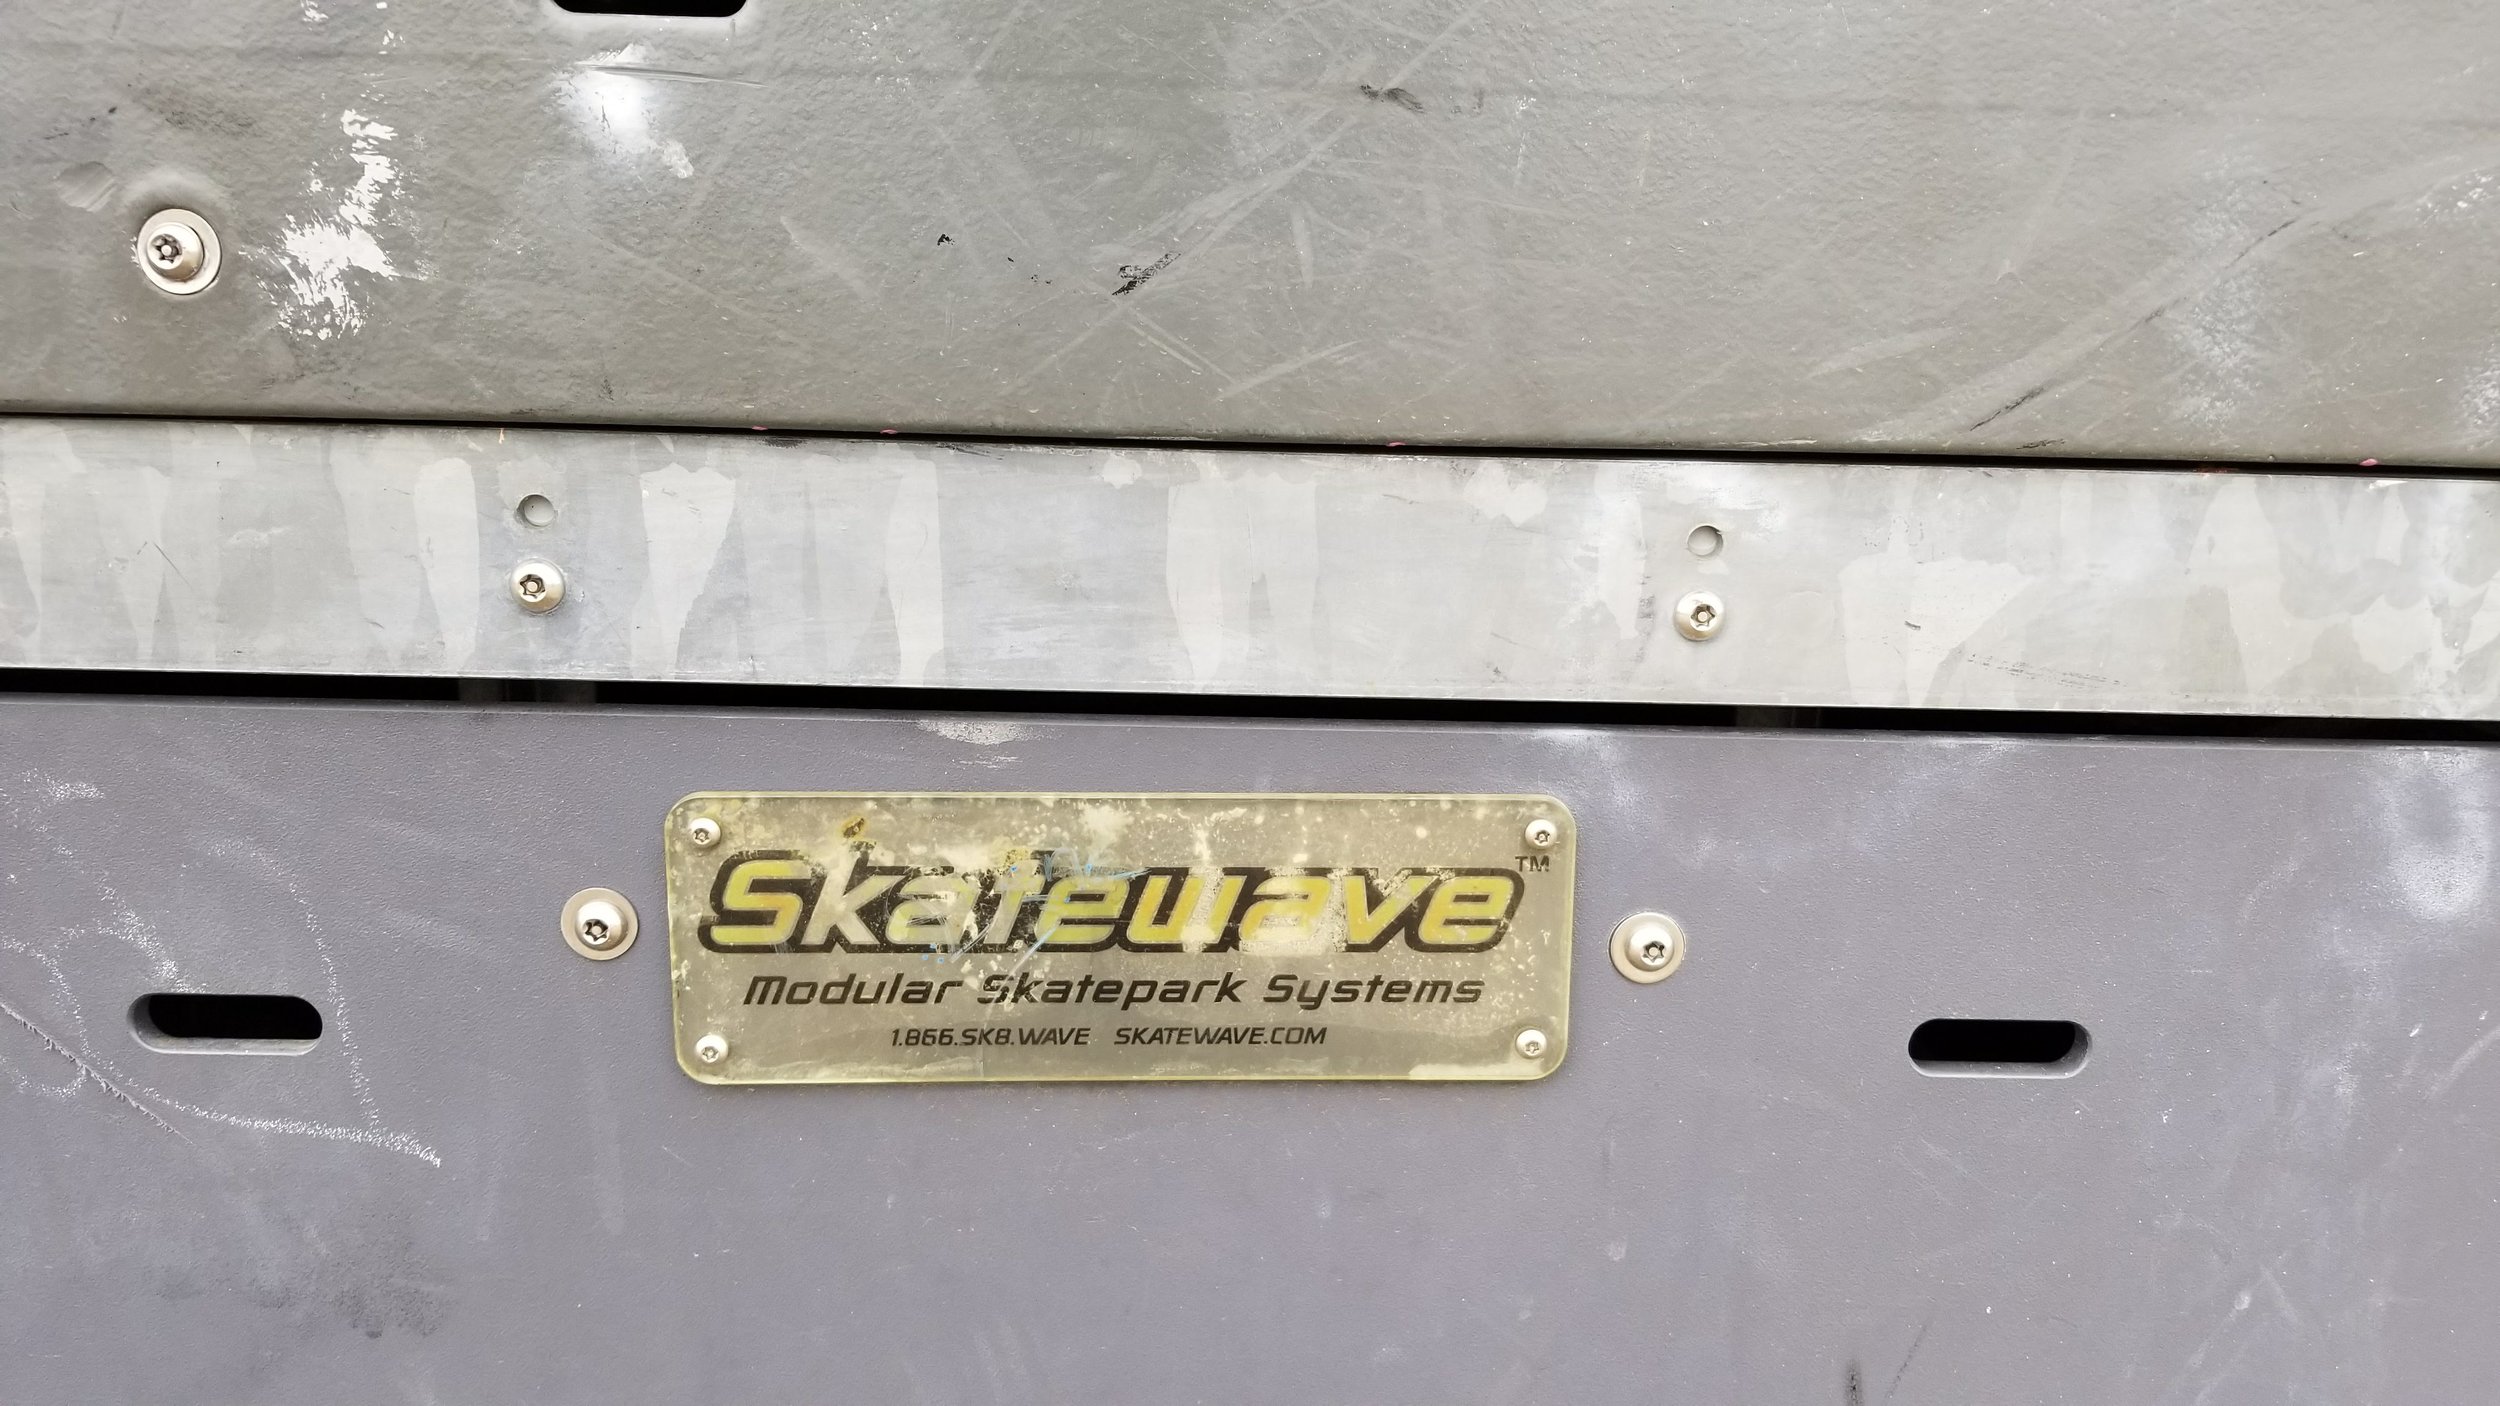 Skatewave Modular Ramps